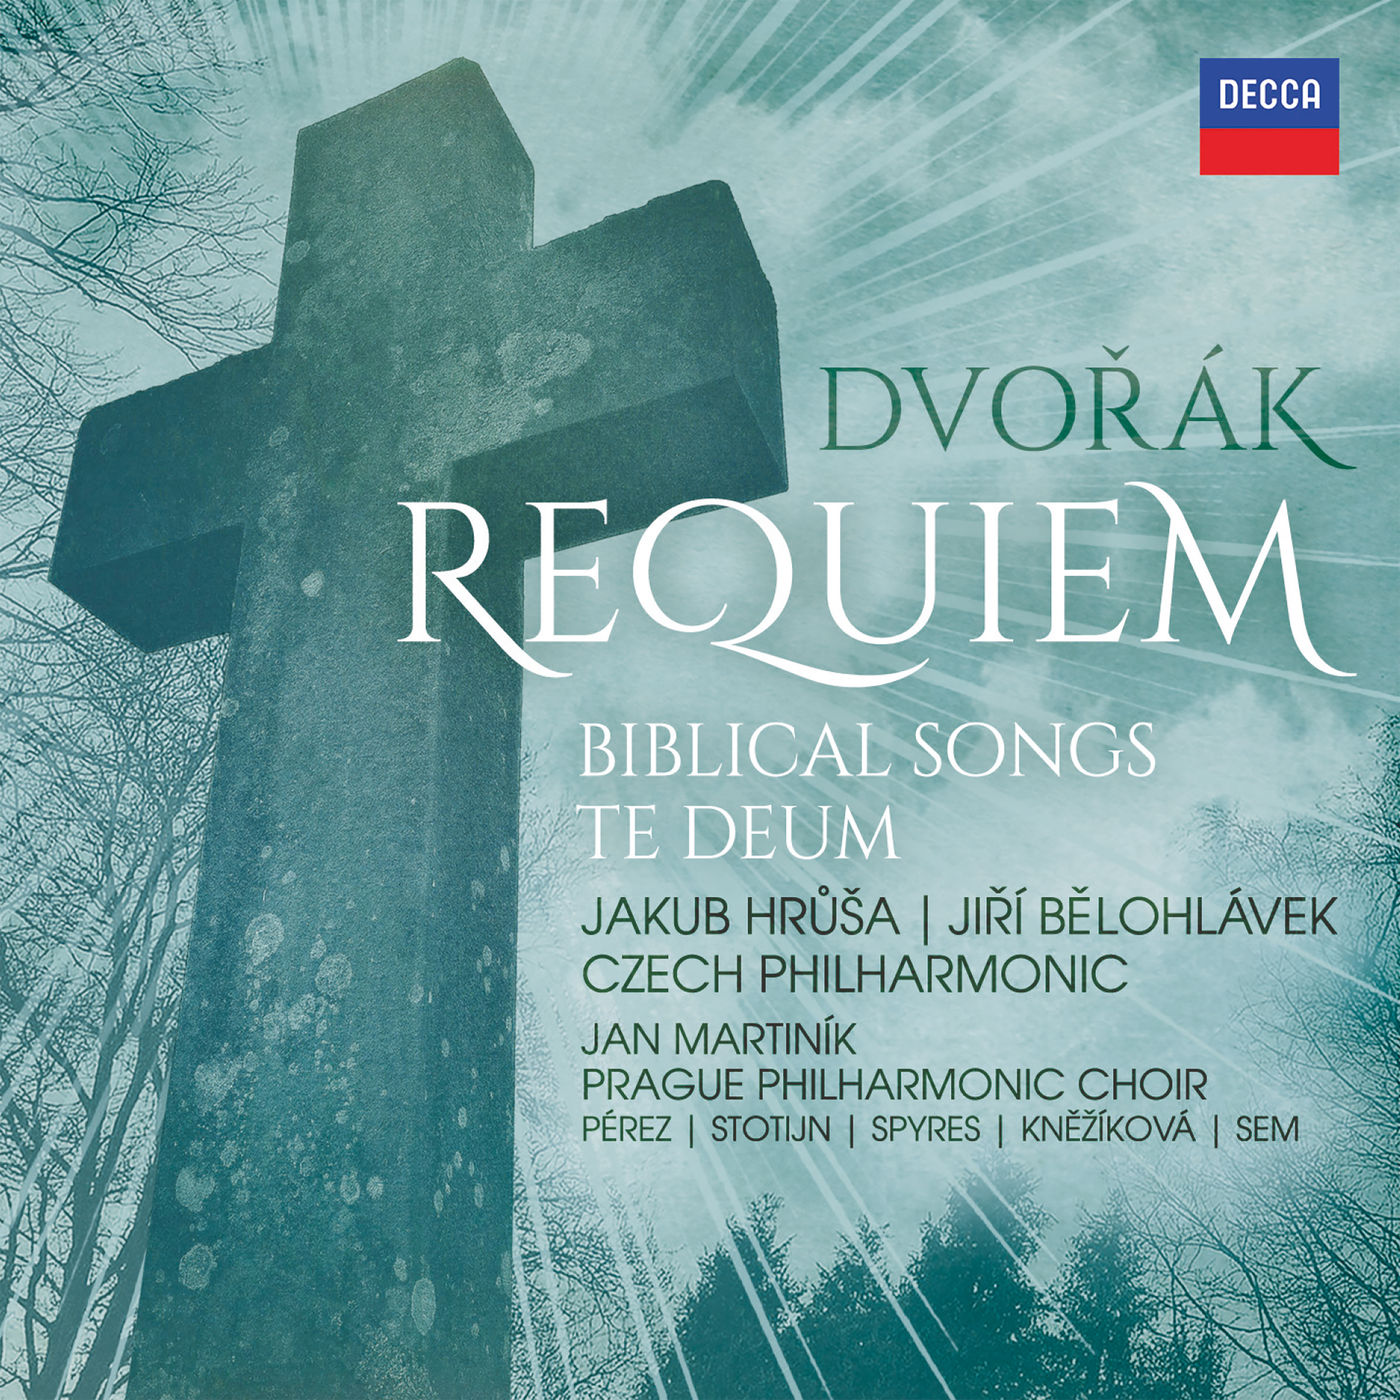 Czech Philharmonic Orchestra, Jakub Hrusa, Jiri Belohlavek - Dvorak: Requiem, Biblical Songs, Te Deum (2020) [FLAC 24bit/96kHz]